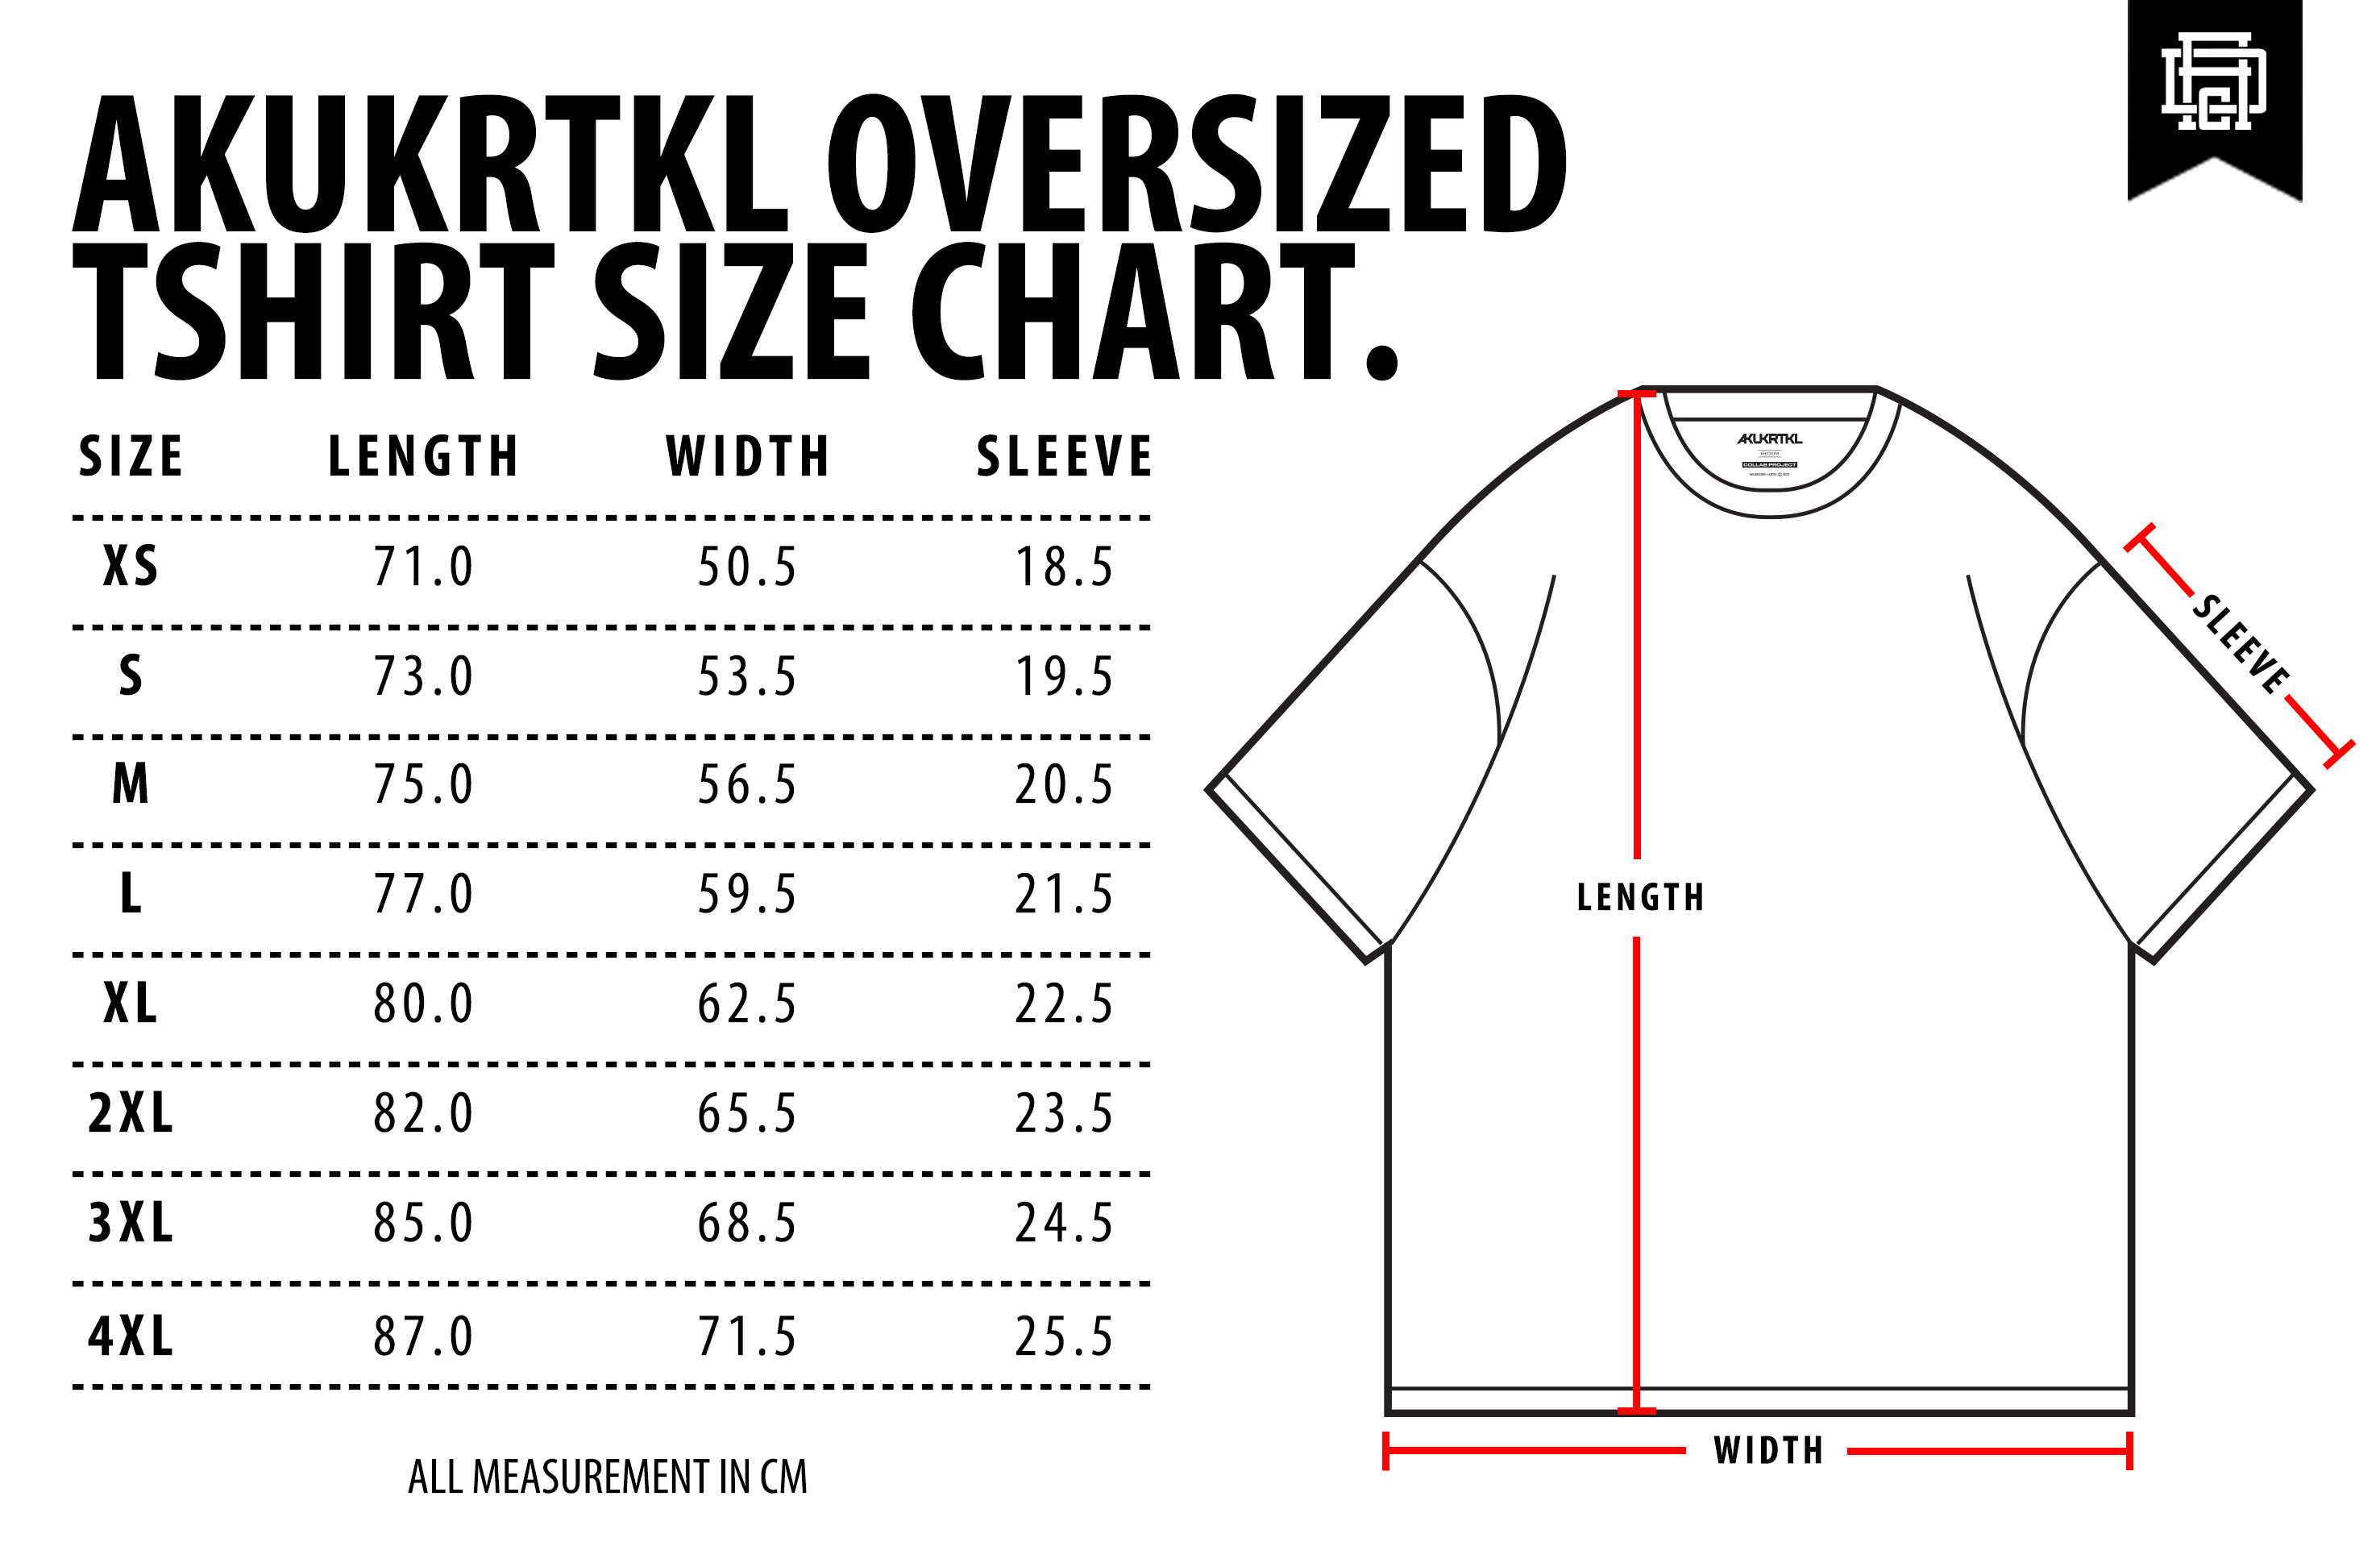 AkuKrtkl Oversized Tshirt Size Chart - WF